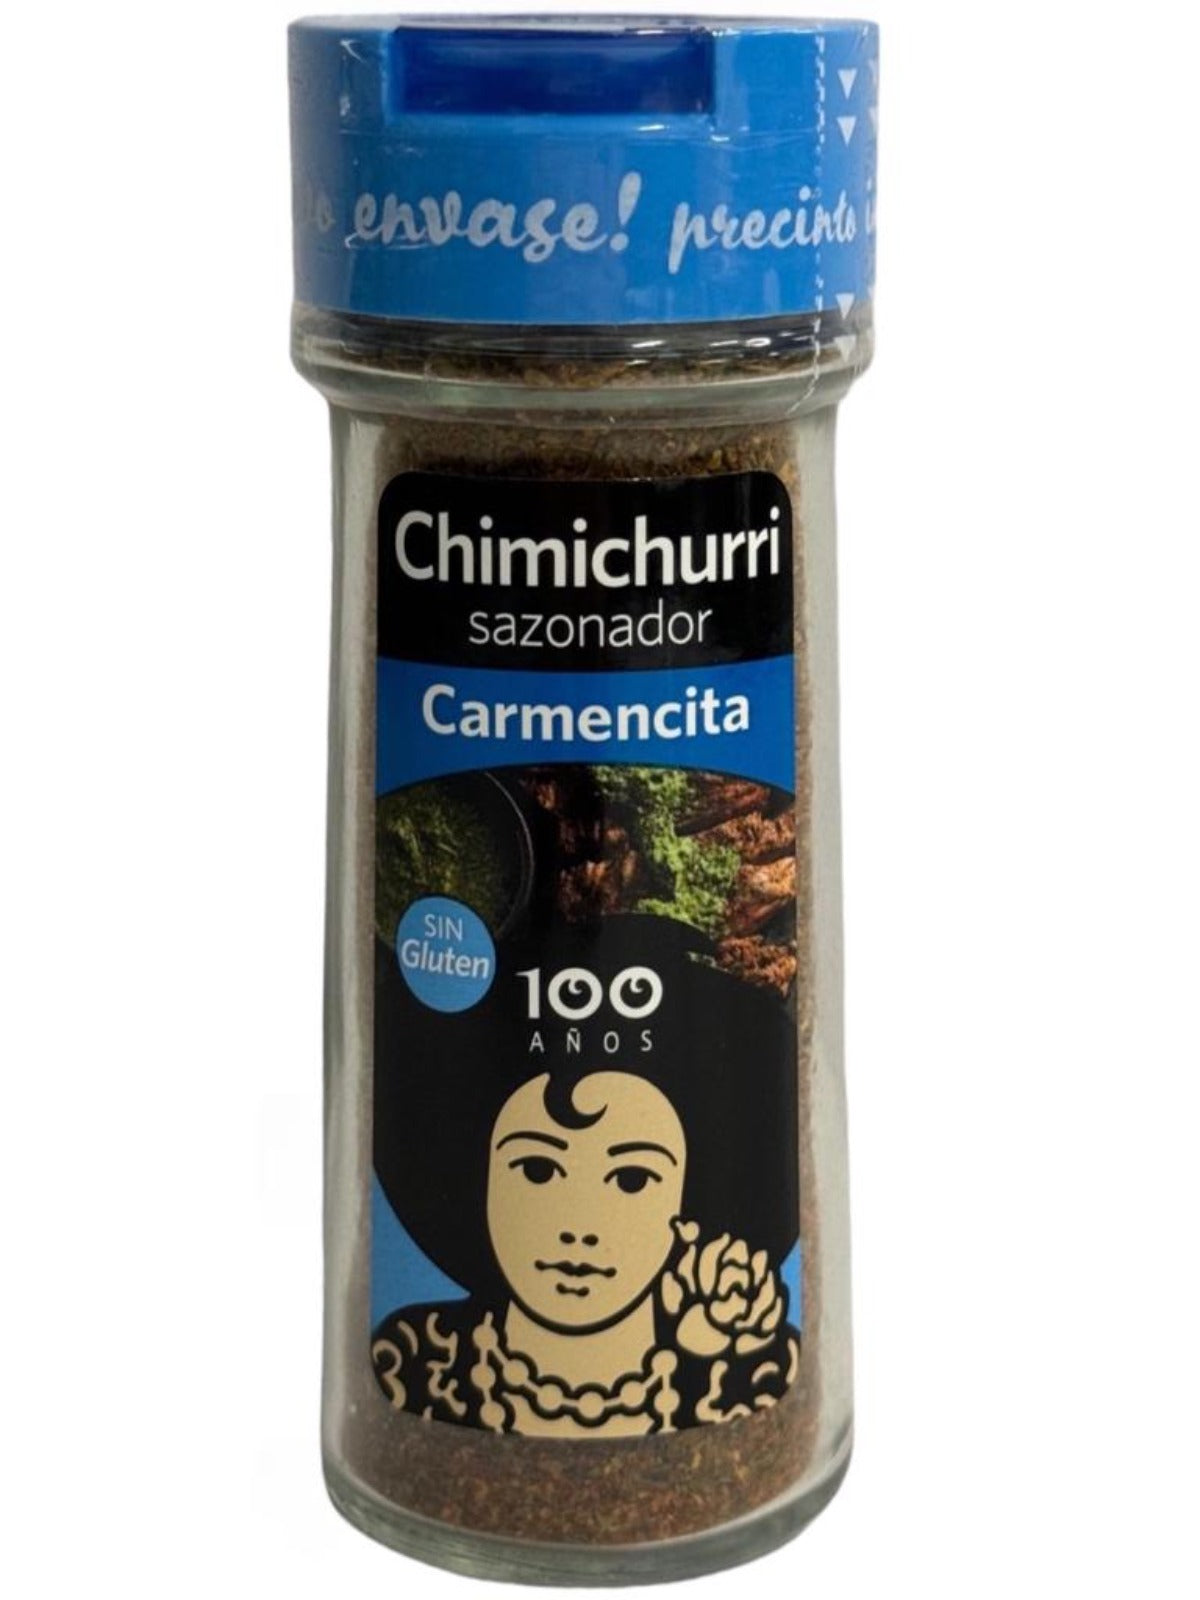 Carmencita Chimichurri Seasoning 27g